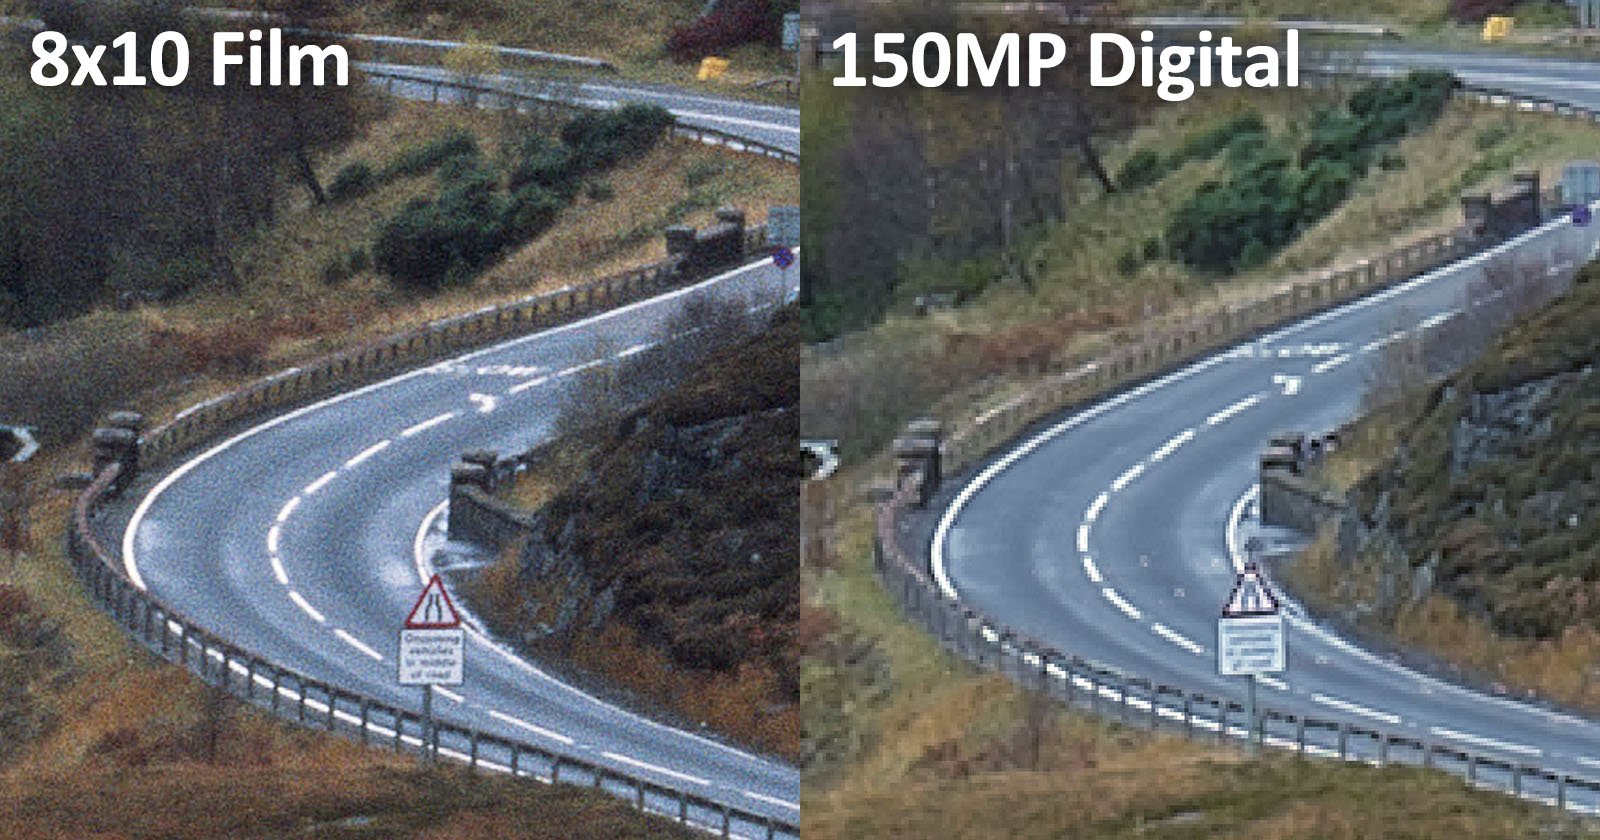 810 Film vs 150MP Digital: Can 150 Megapixels Compete?